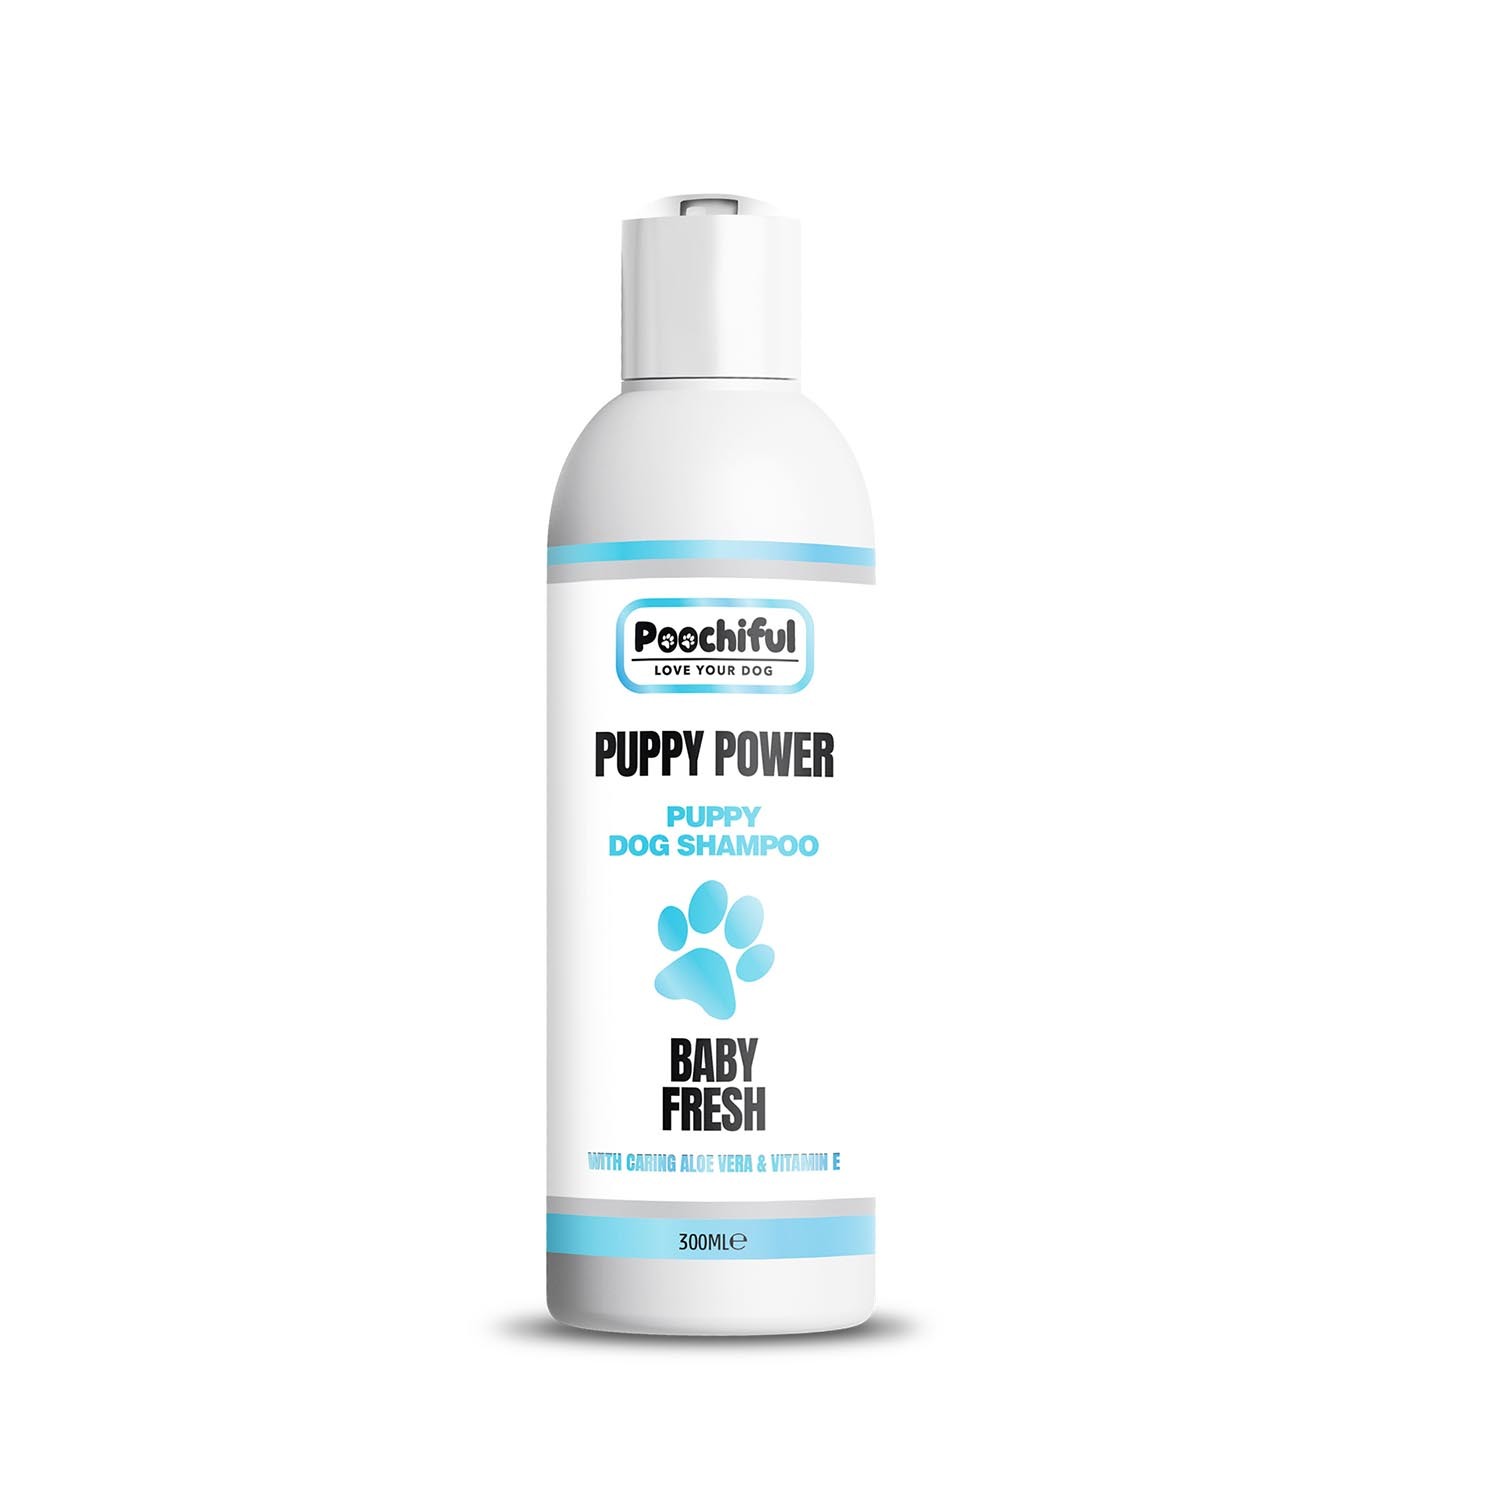 Poochiful Puppy Power Shampoo Image